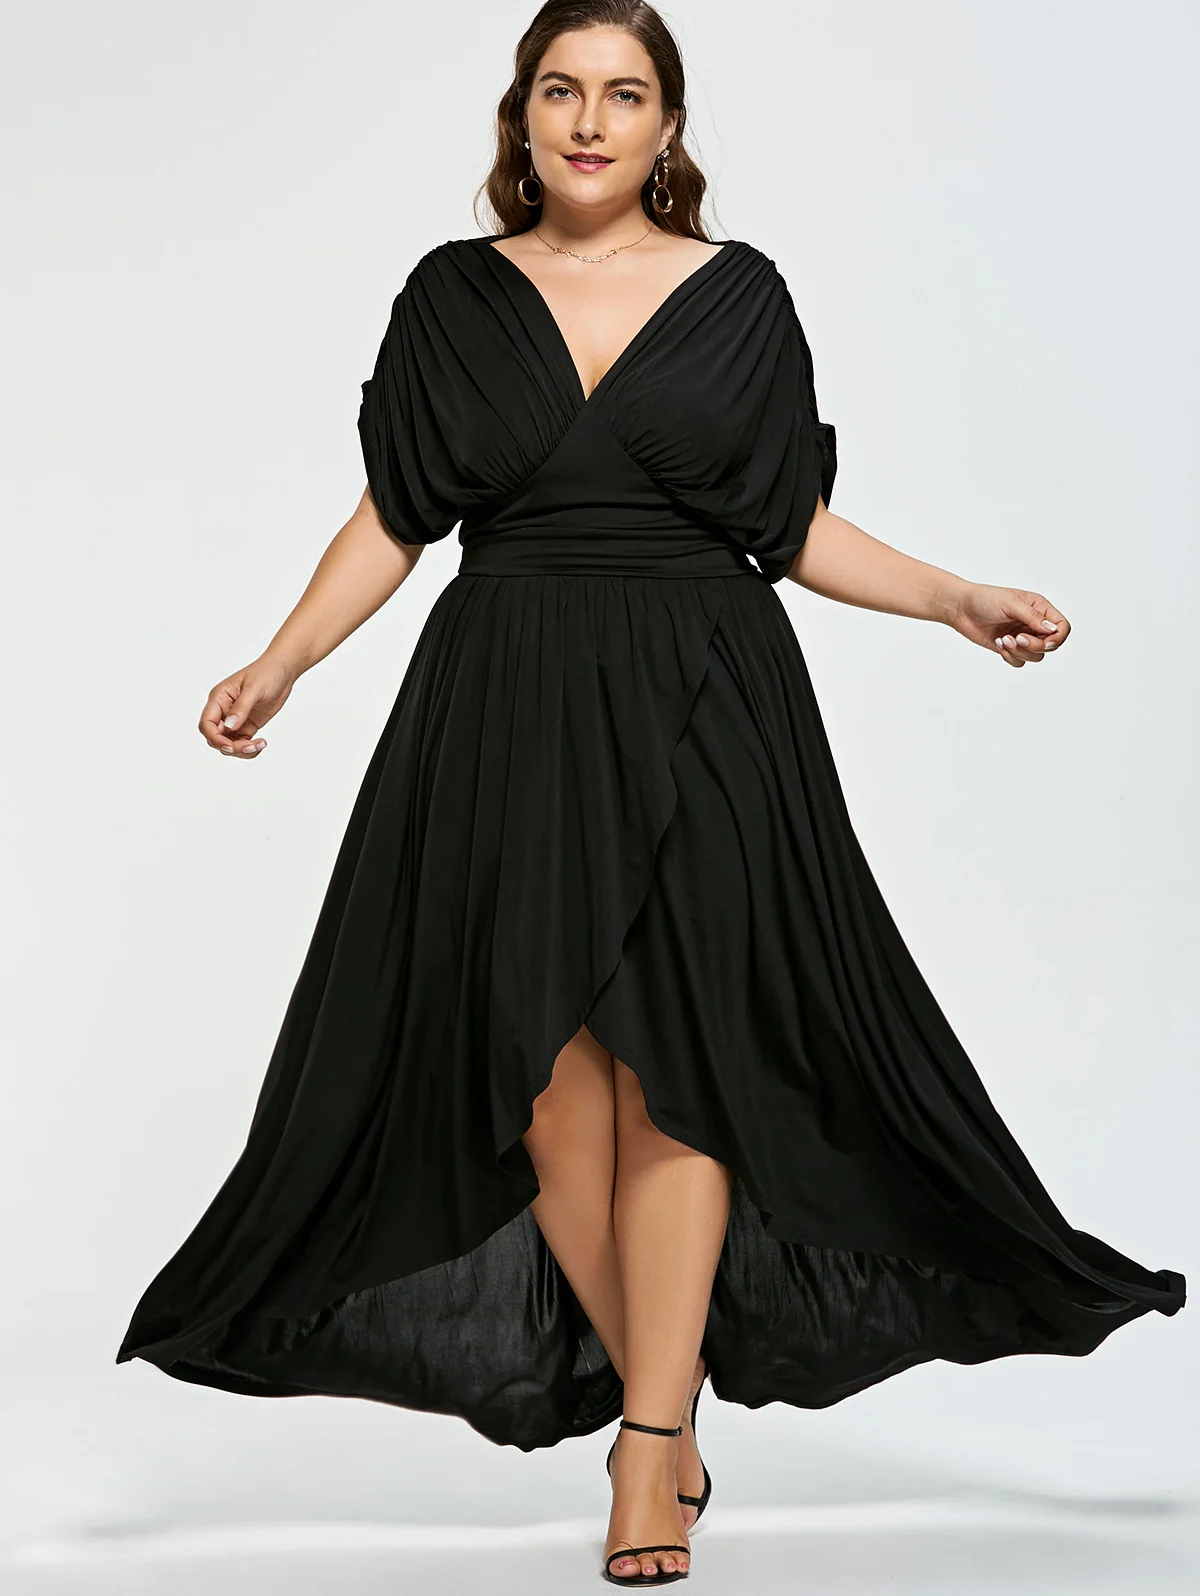 Aliexpress.com : Buy Gamiss Plus Size V Neck Women Summer Dress Short ...